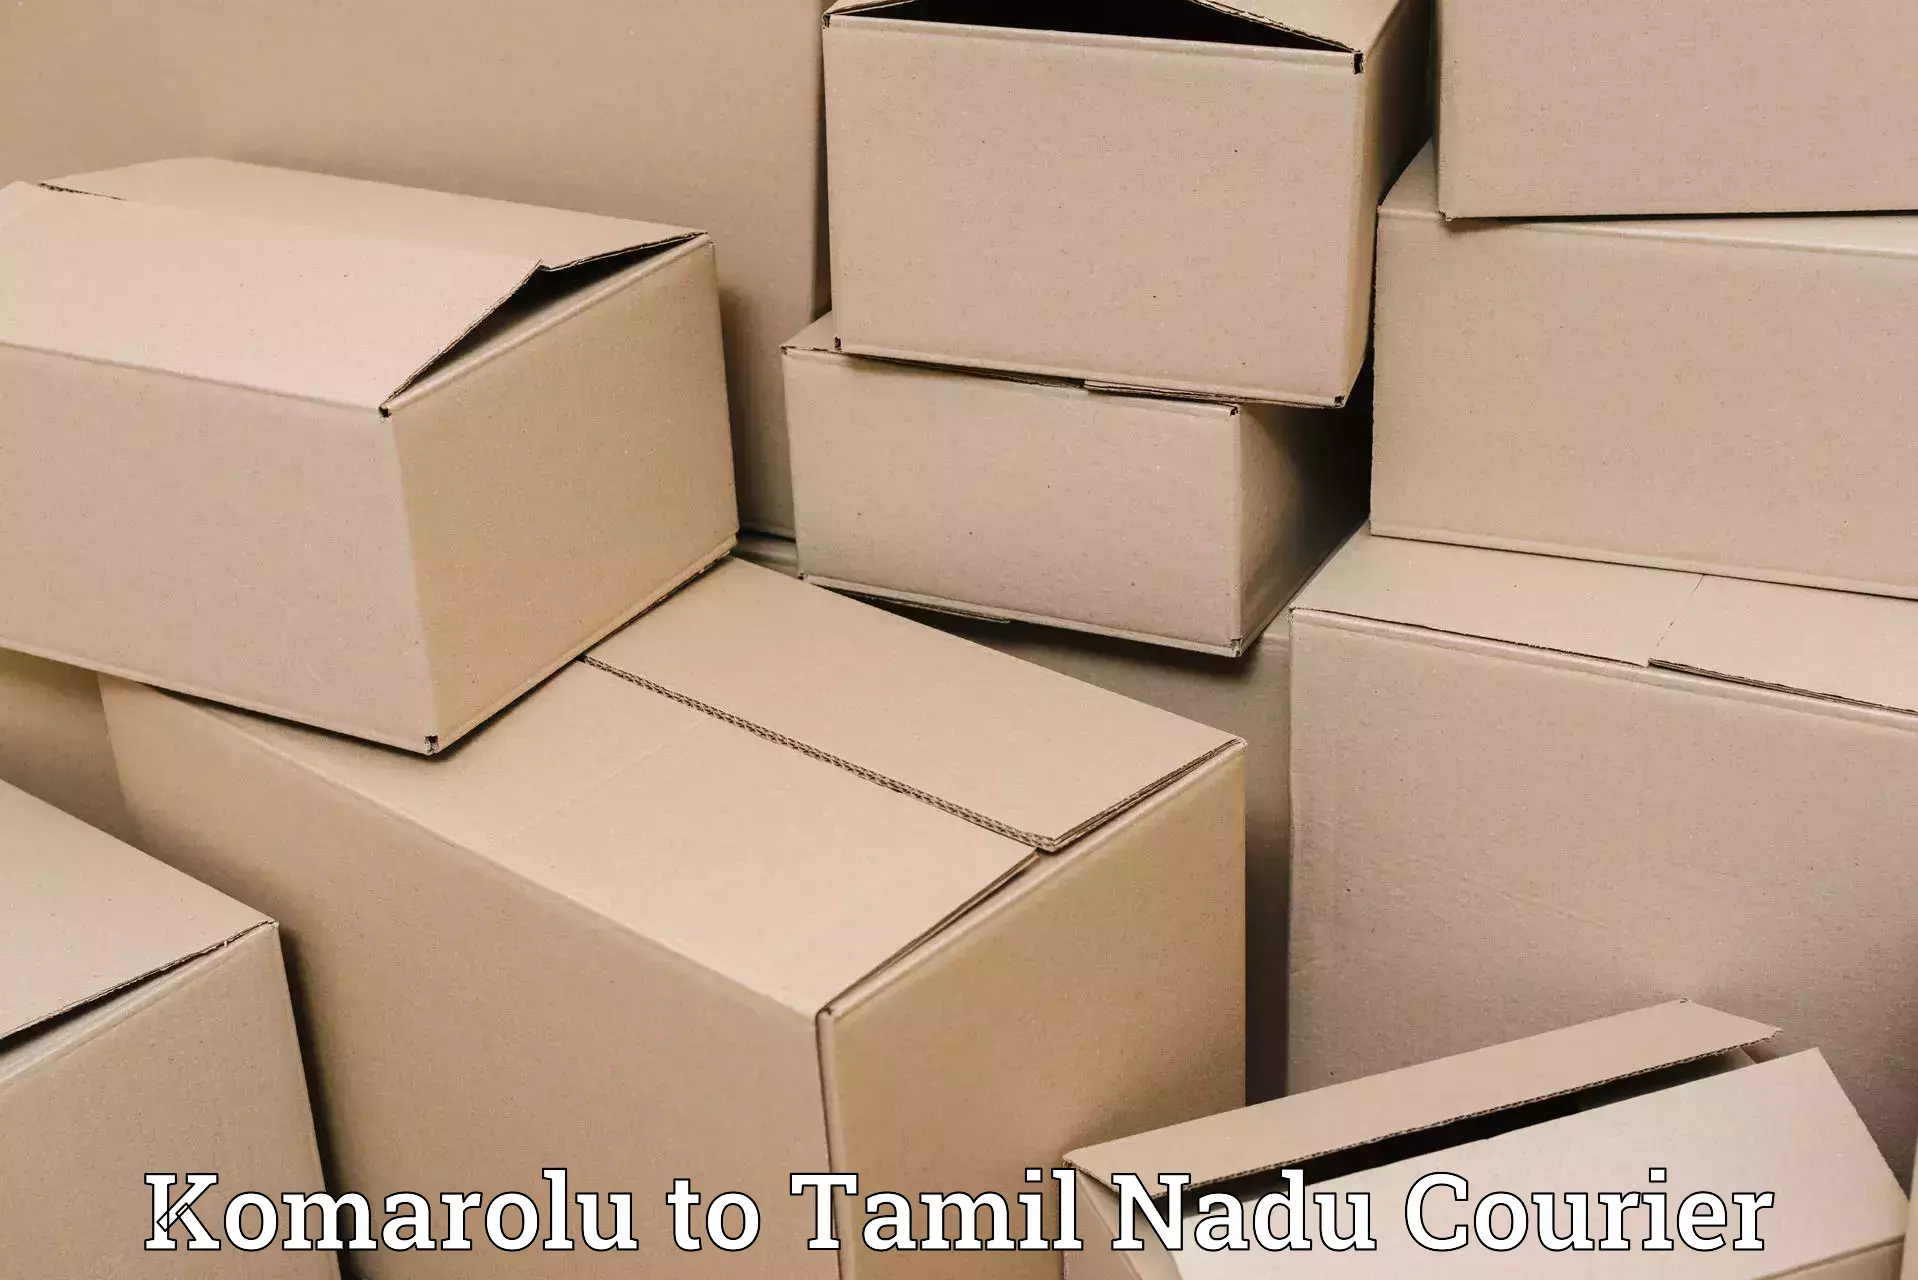 Professional courier handling Komarolu to Cuddalore